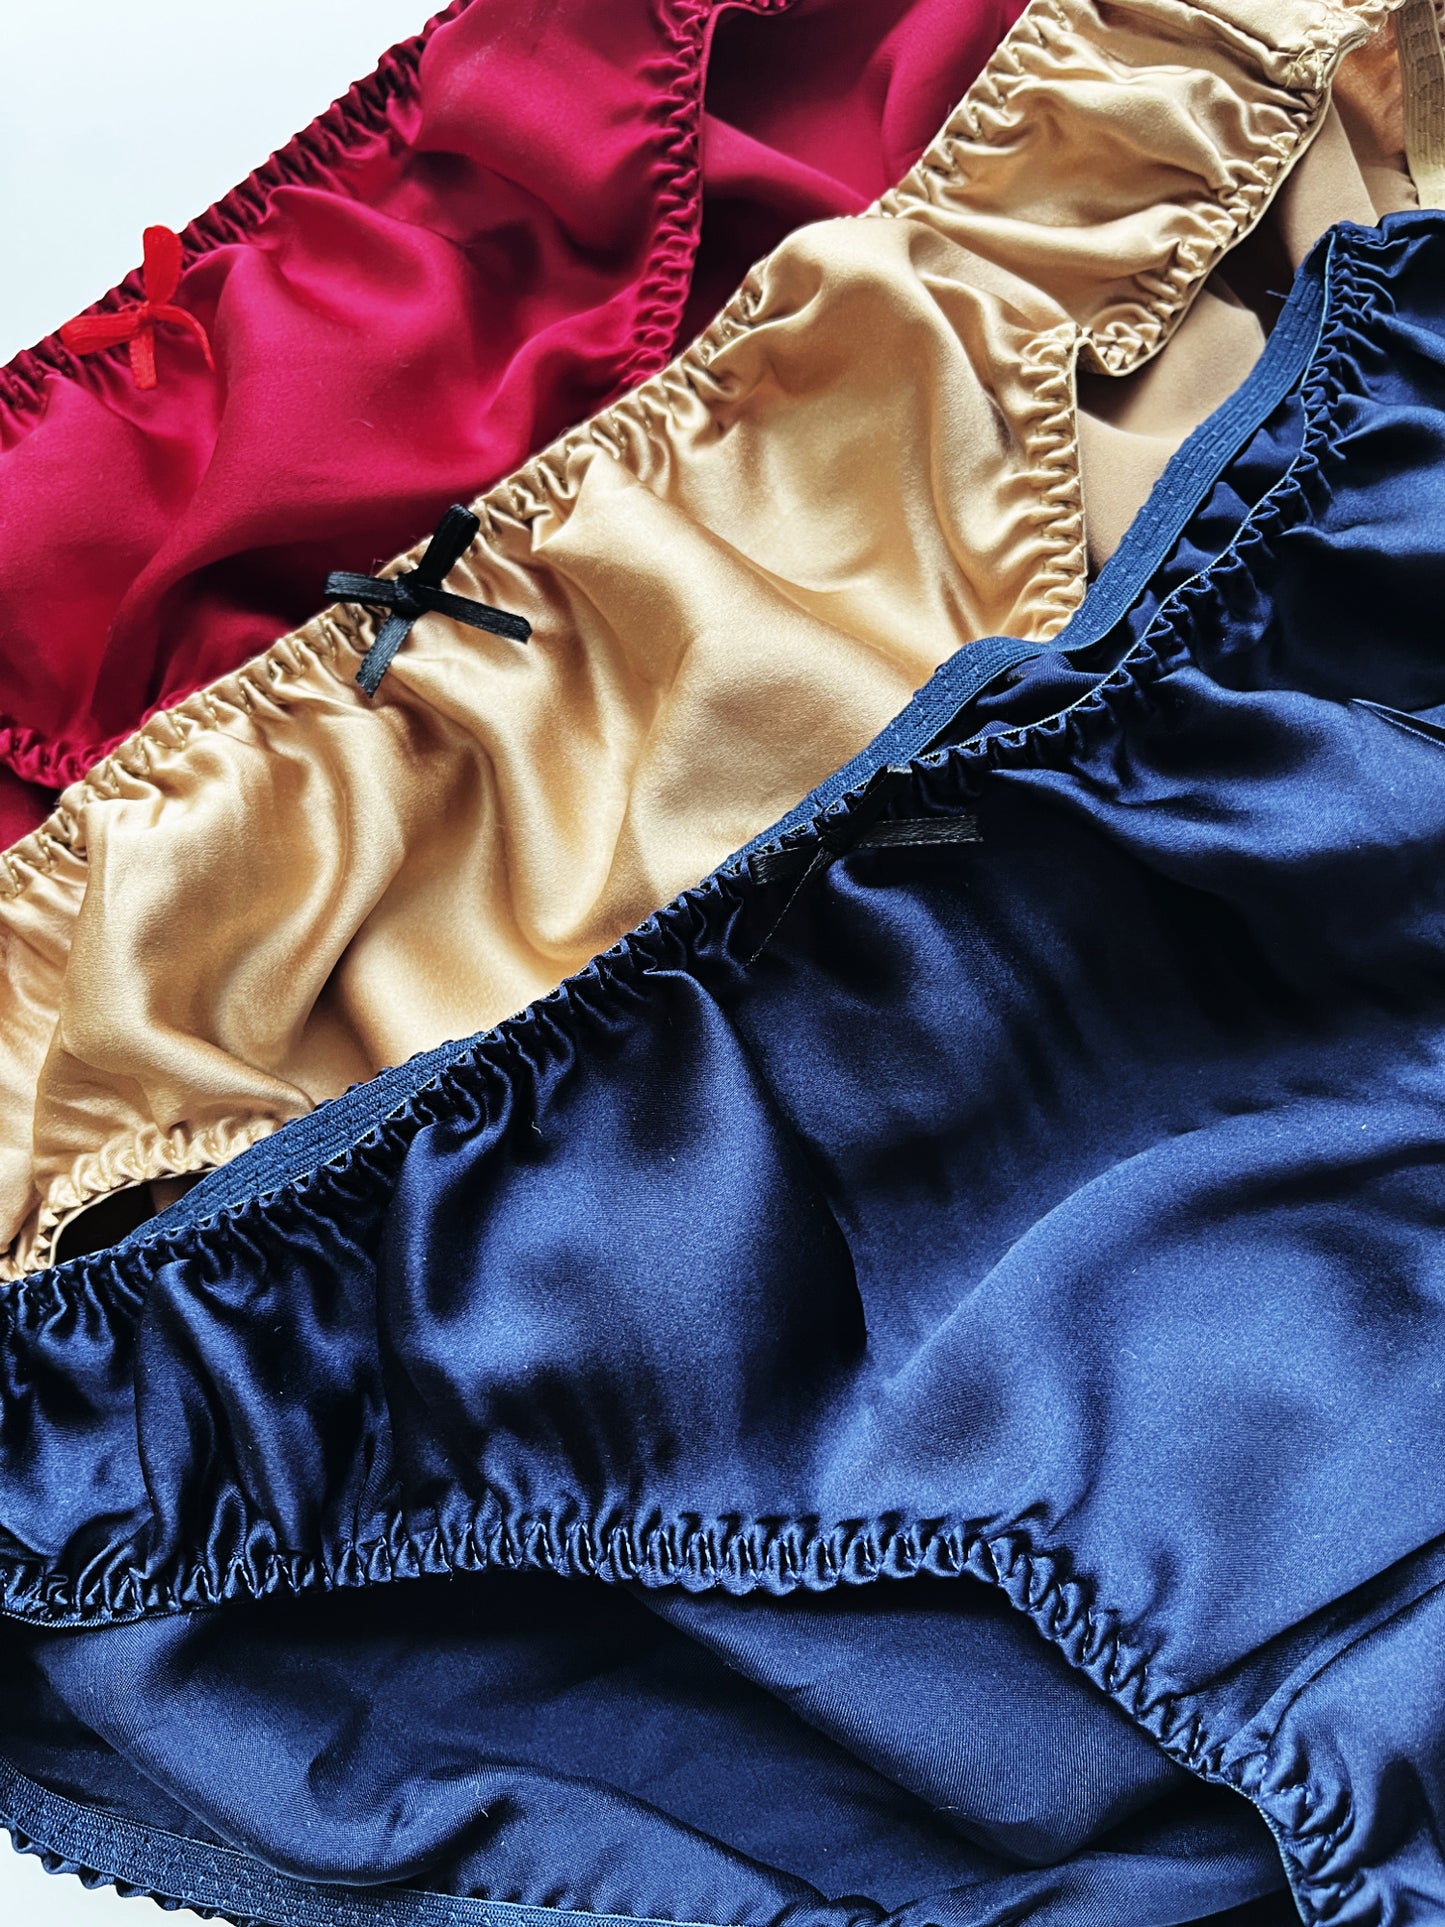 100% silk panties for women | Silk panties | Silk underwear for women | Made in Canada silk panties